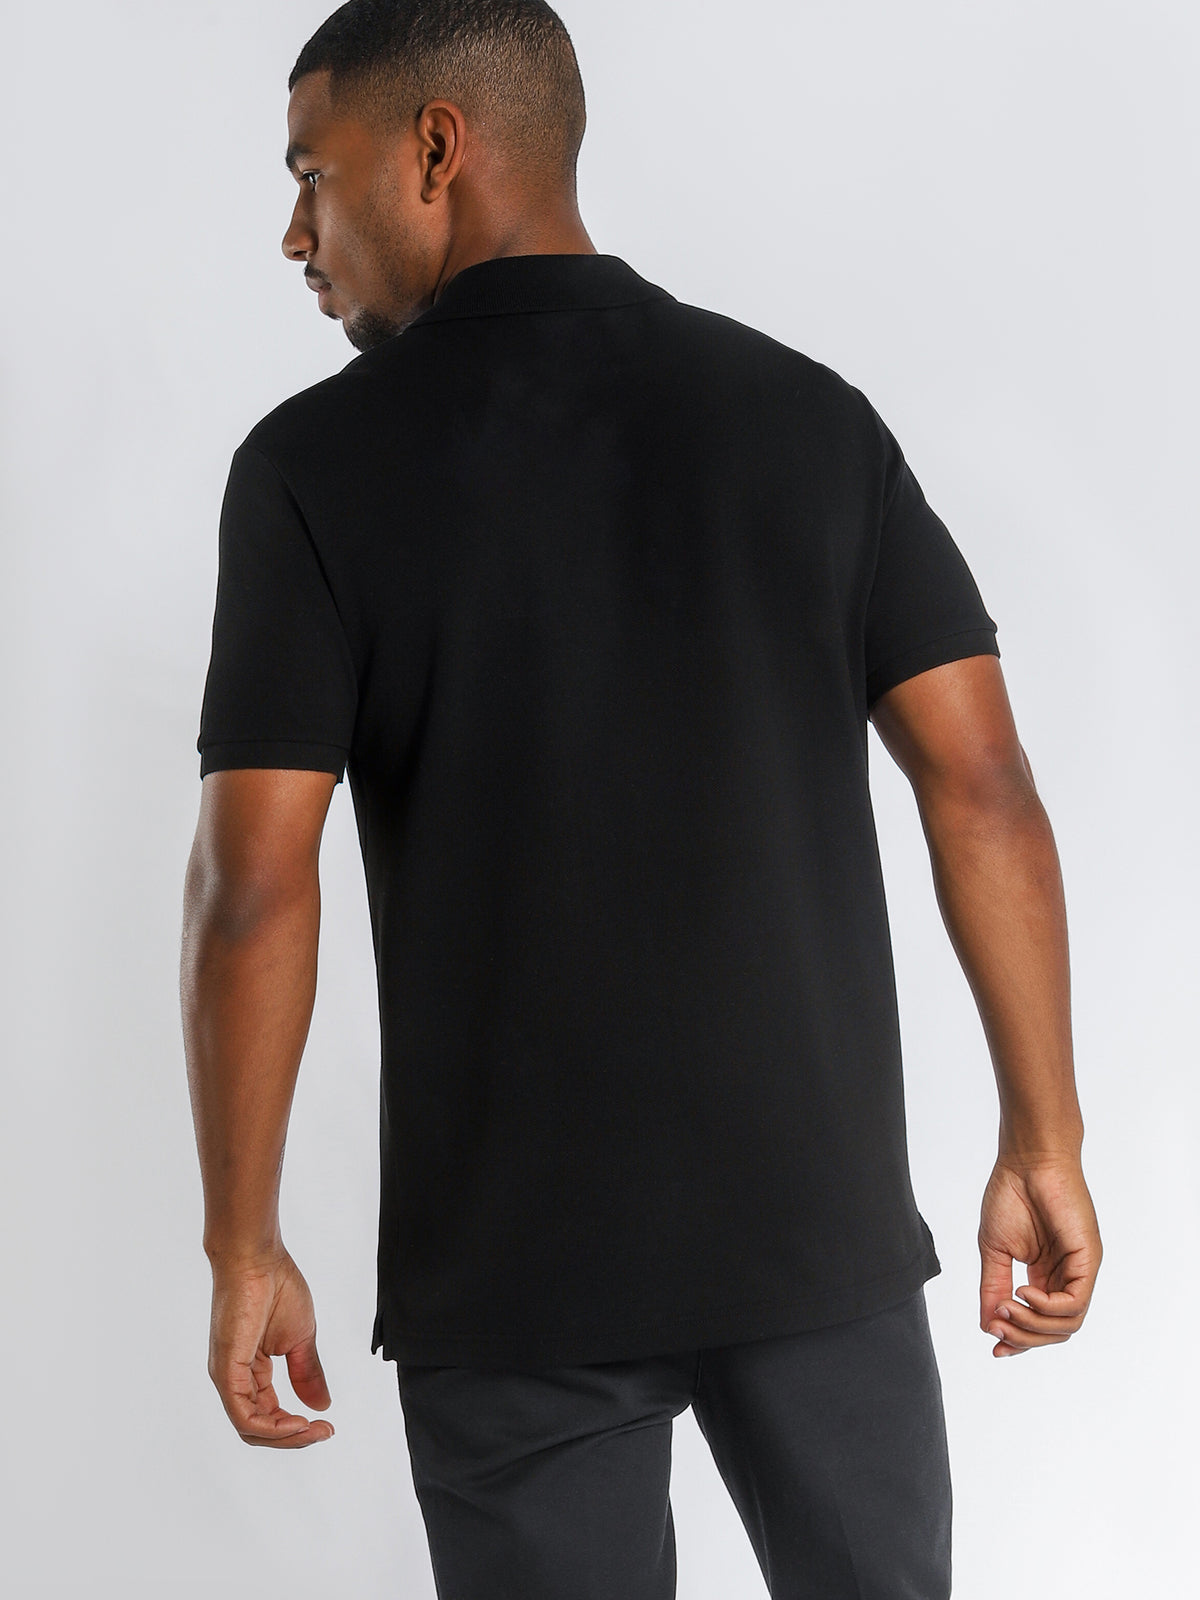 Basic Polo Shirt in Black